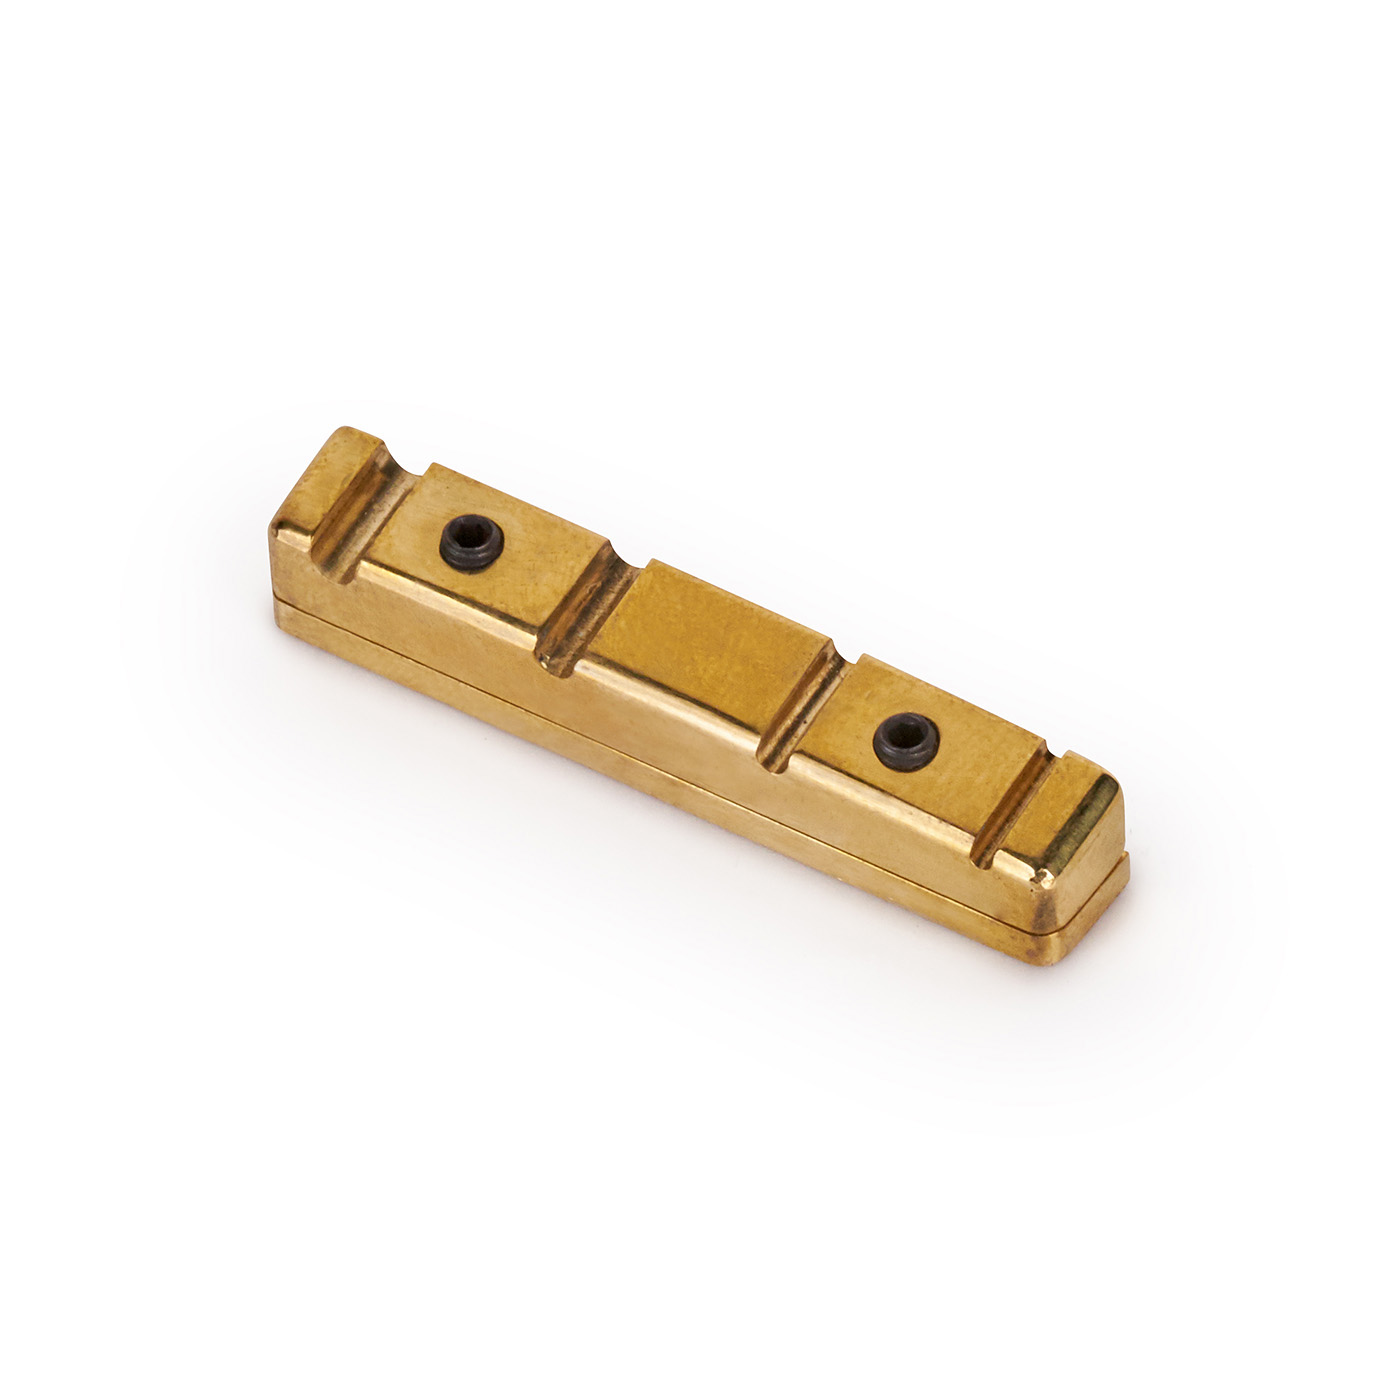 Warwick Parts - Just-A-Nut III, 4-String, Lefthand, 44 mm width - Brass